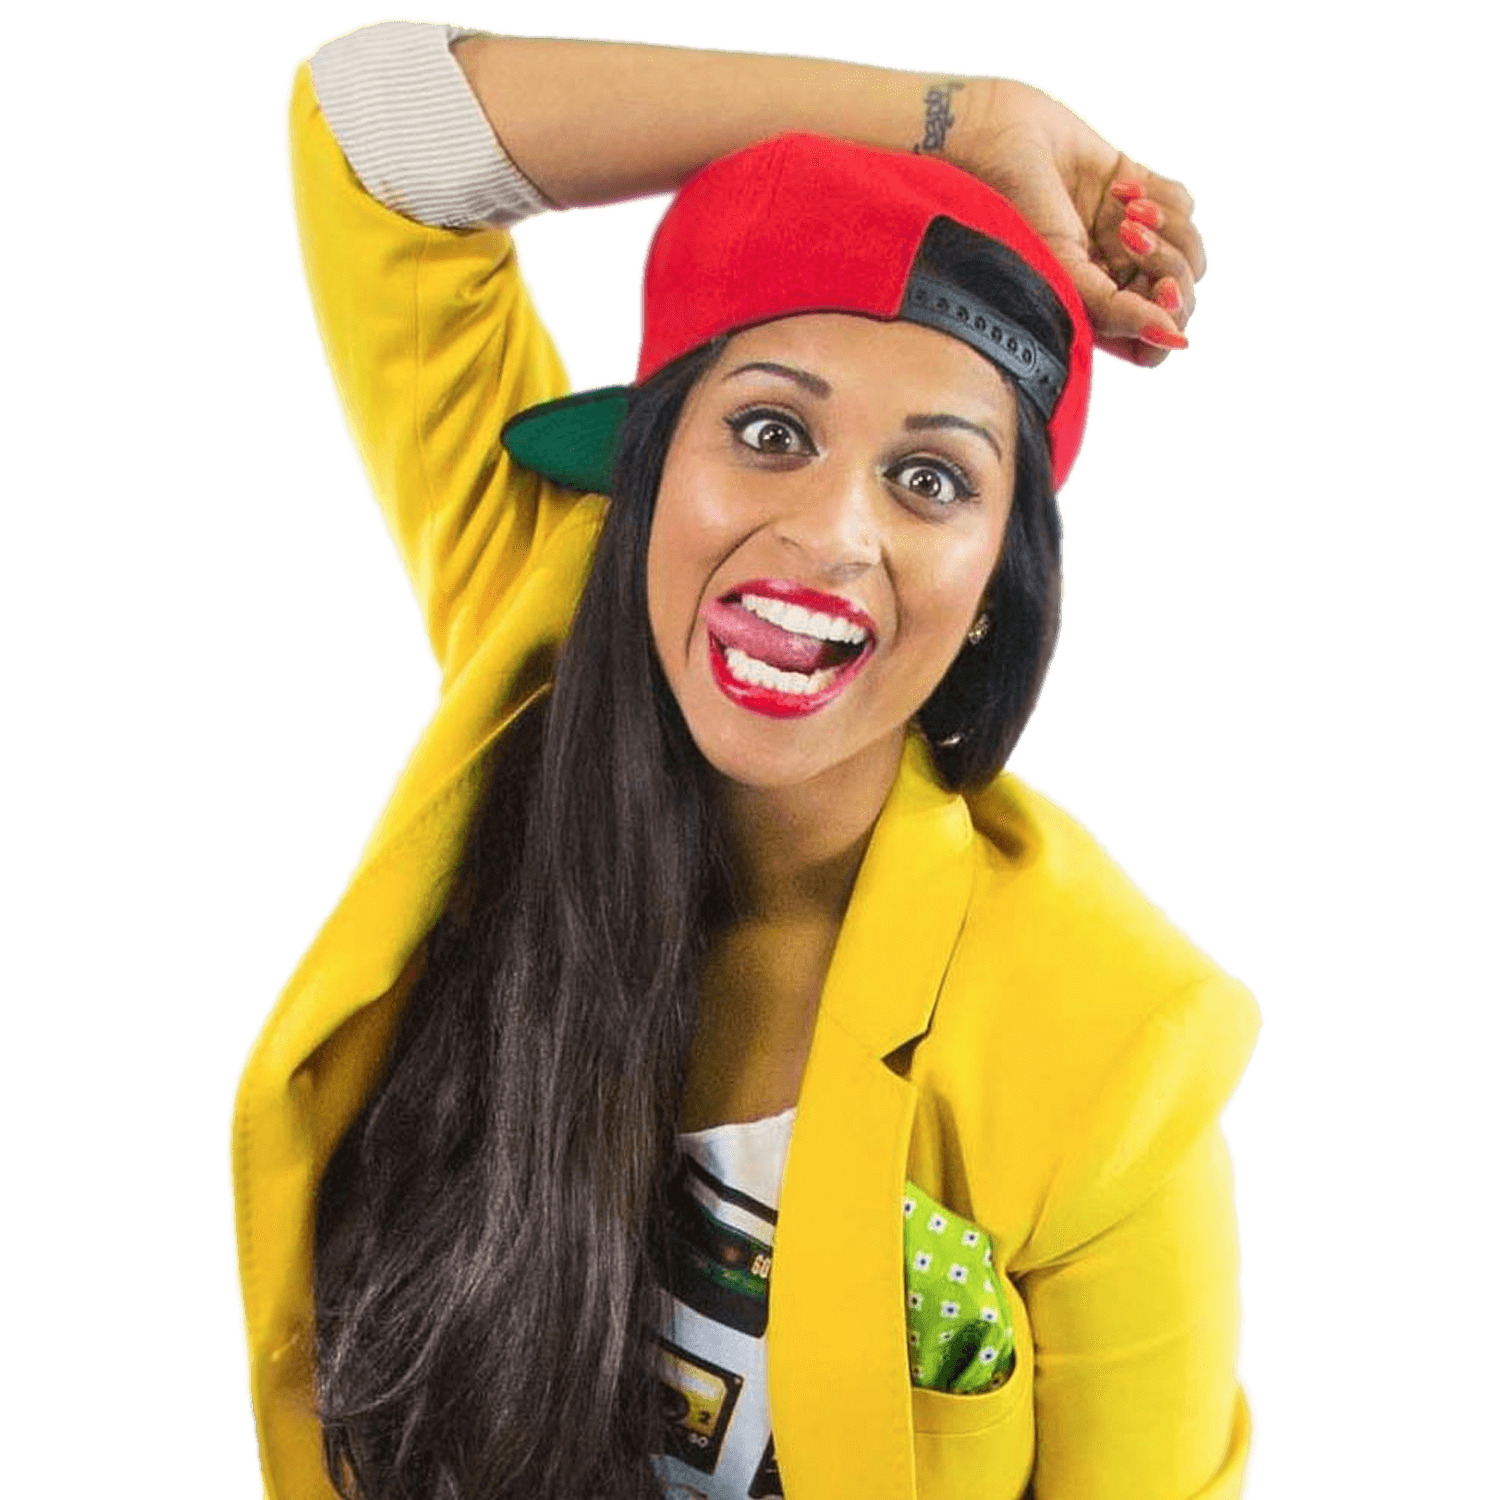 Lilly Singh IISuperwomanII Yellow icons